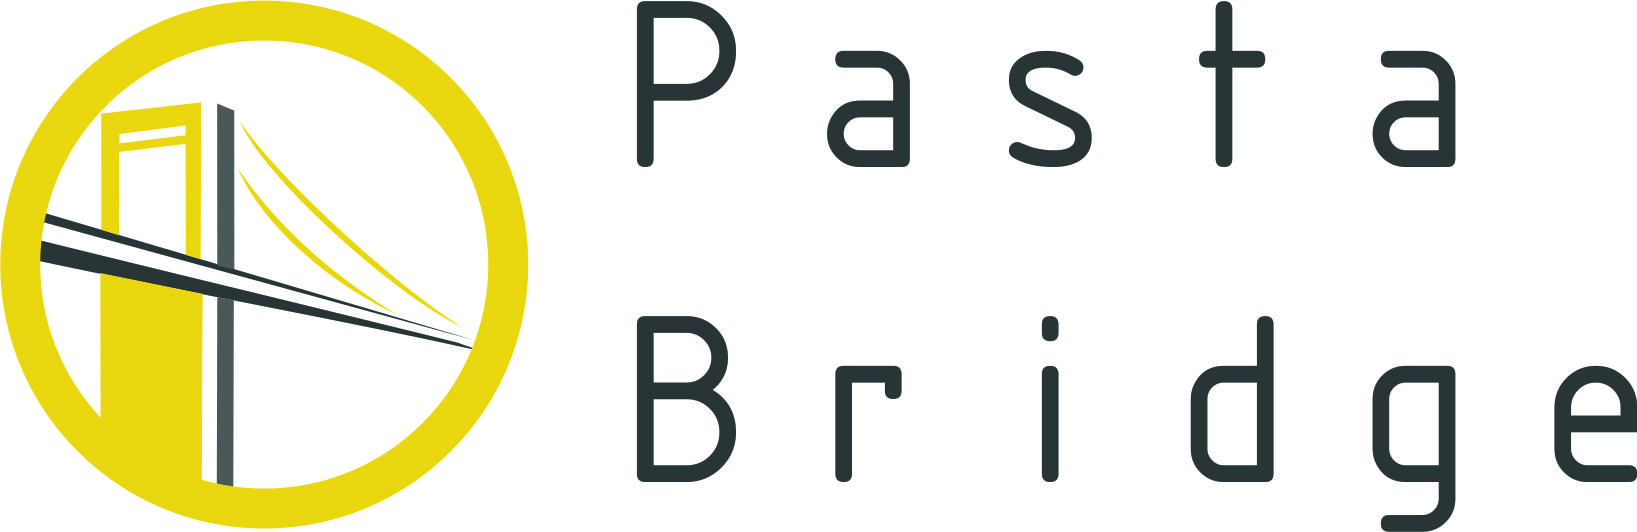 Pasta Bridge - sigla cu PB